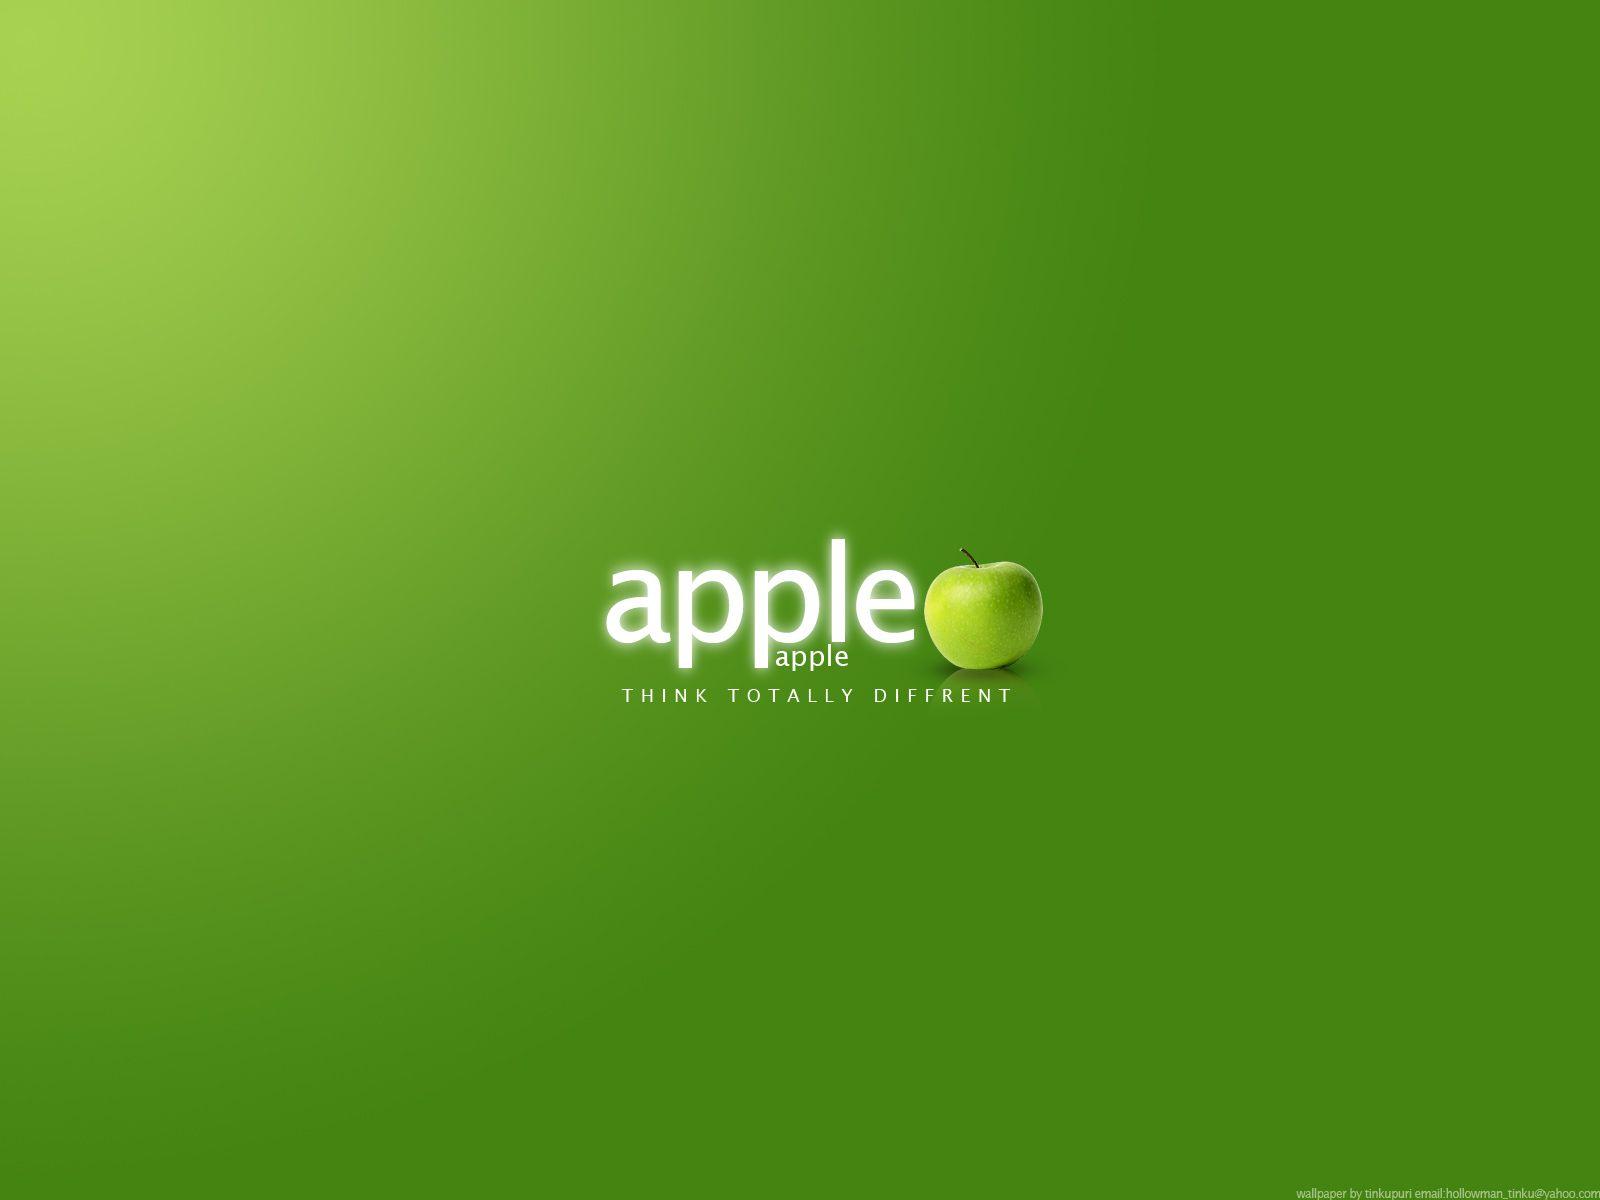 Green Apple logo wallpaper. Green Apple logo